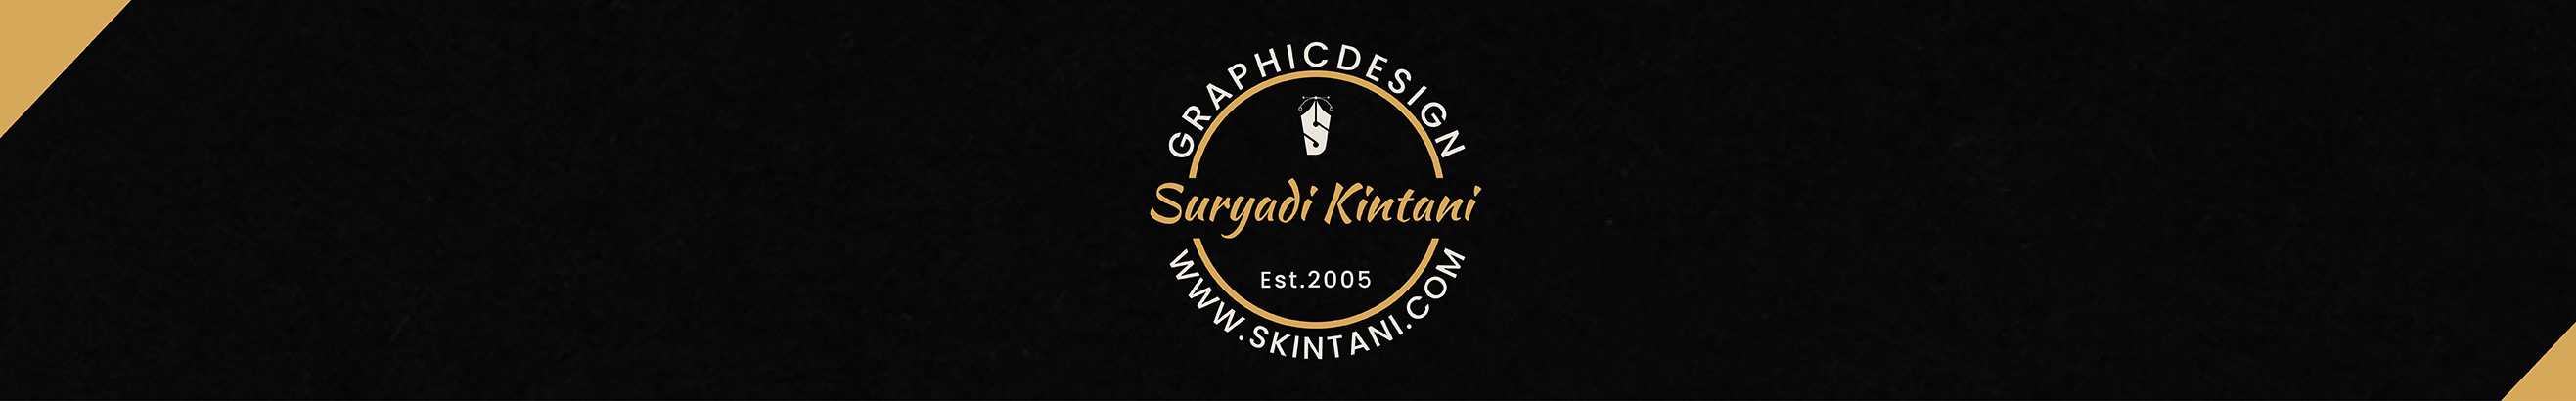 Banner de perfil de Suryadi Kintani